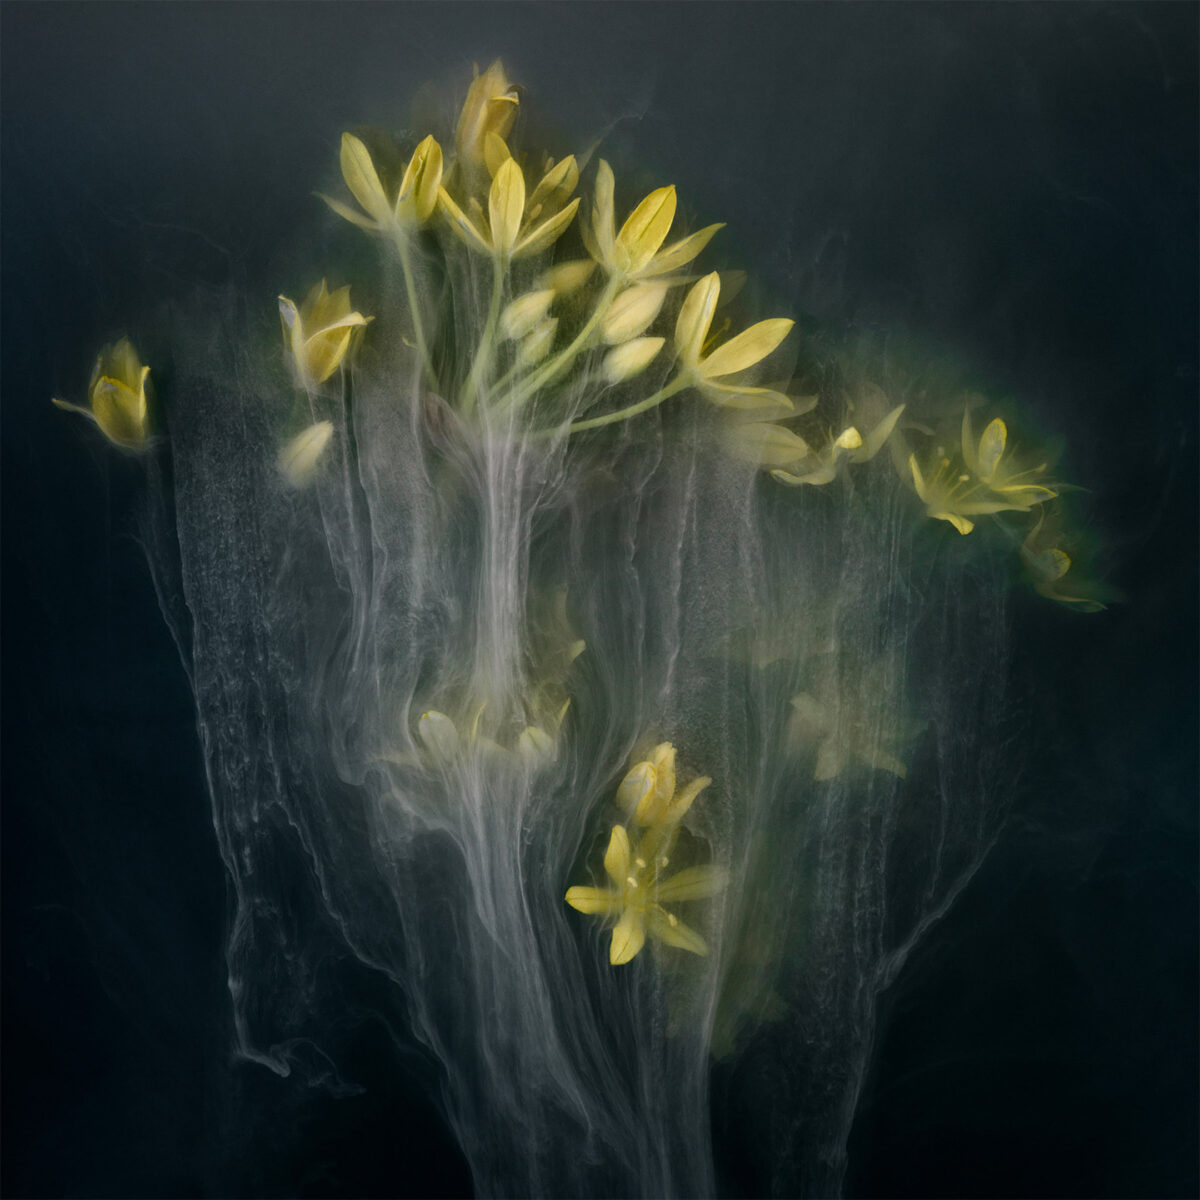 Flower Power A Fascinating Conceptual Still Life Photography Series Of Robert Peek 21